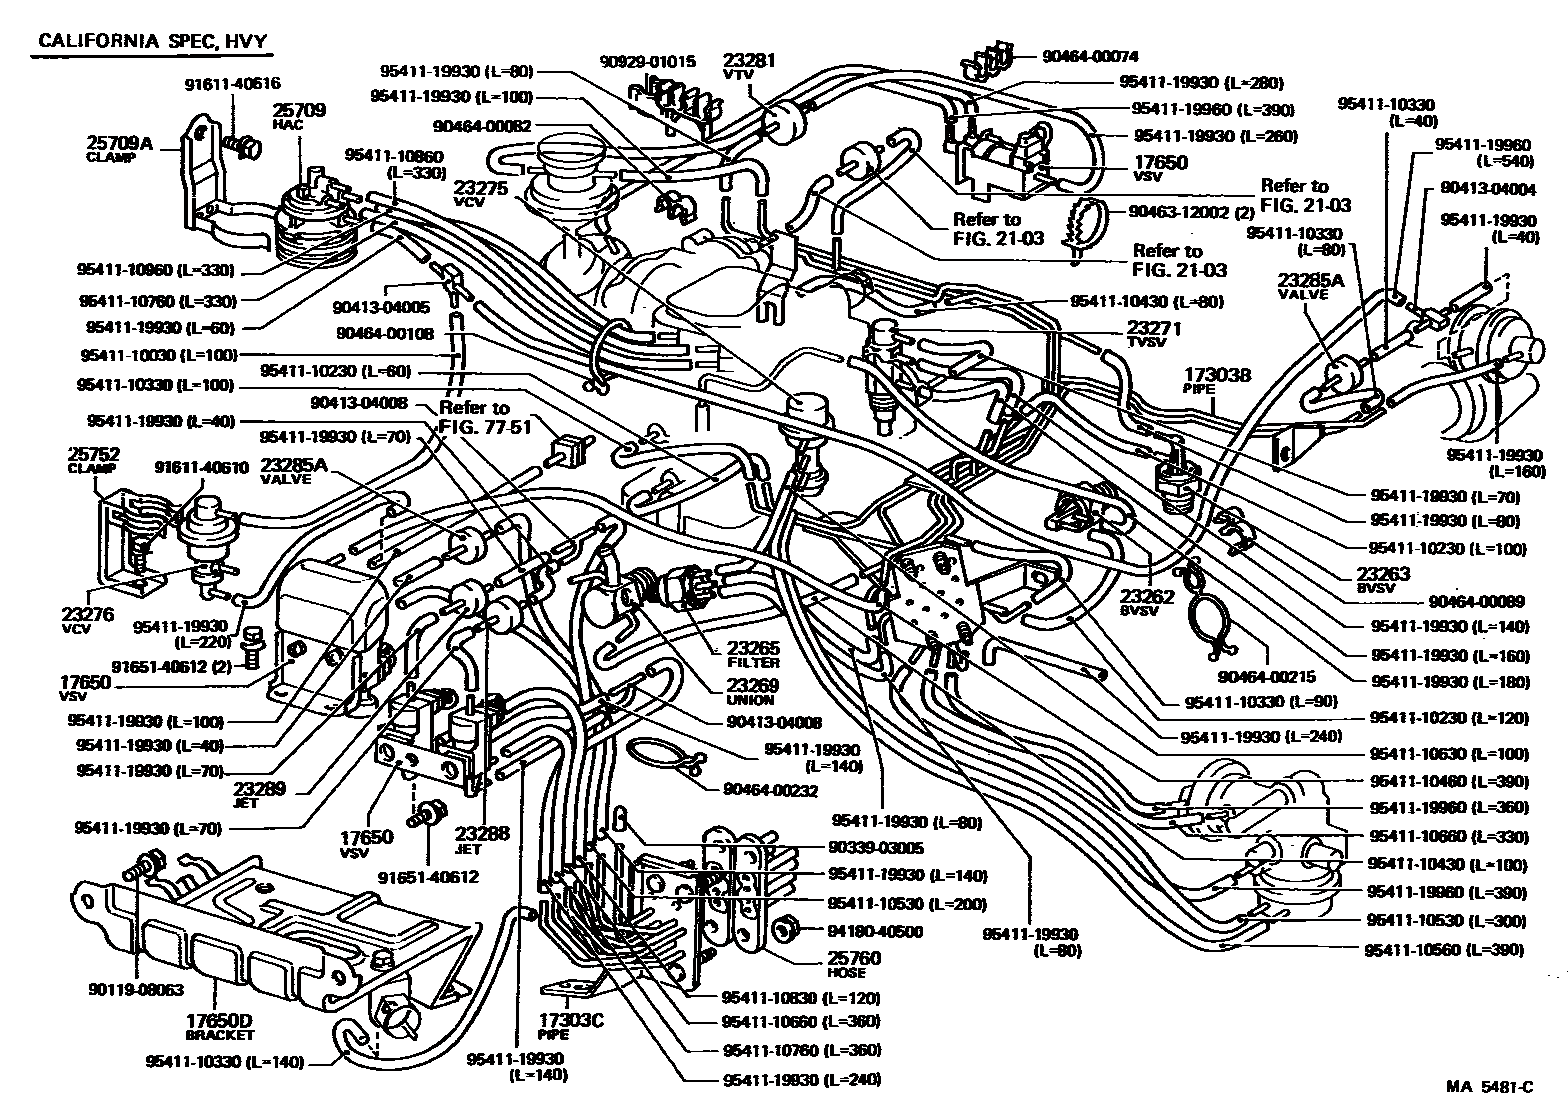 1985 Toyota Pickup Wiring Diagram from www.yotatech.com